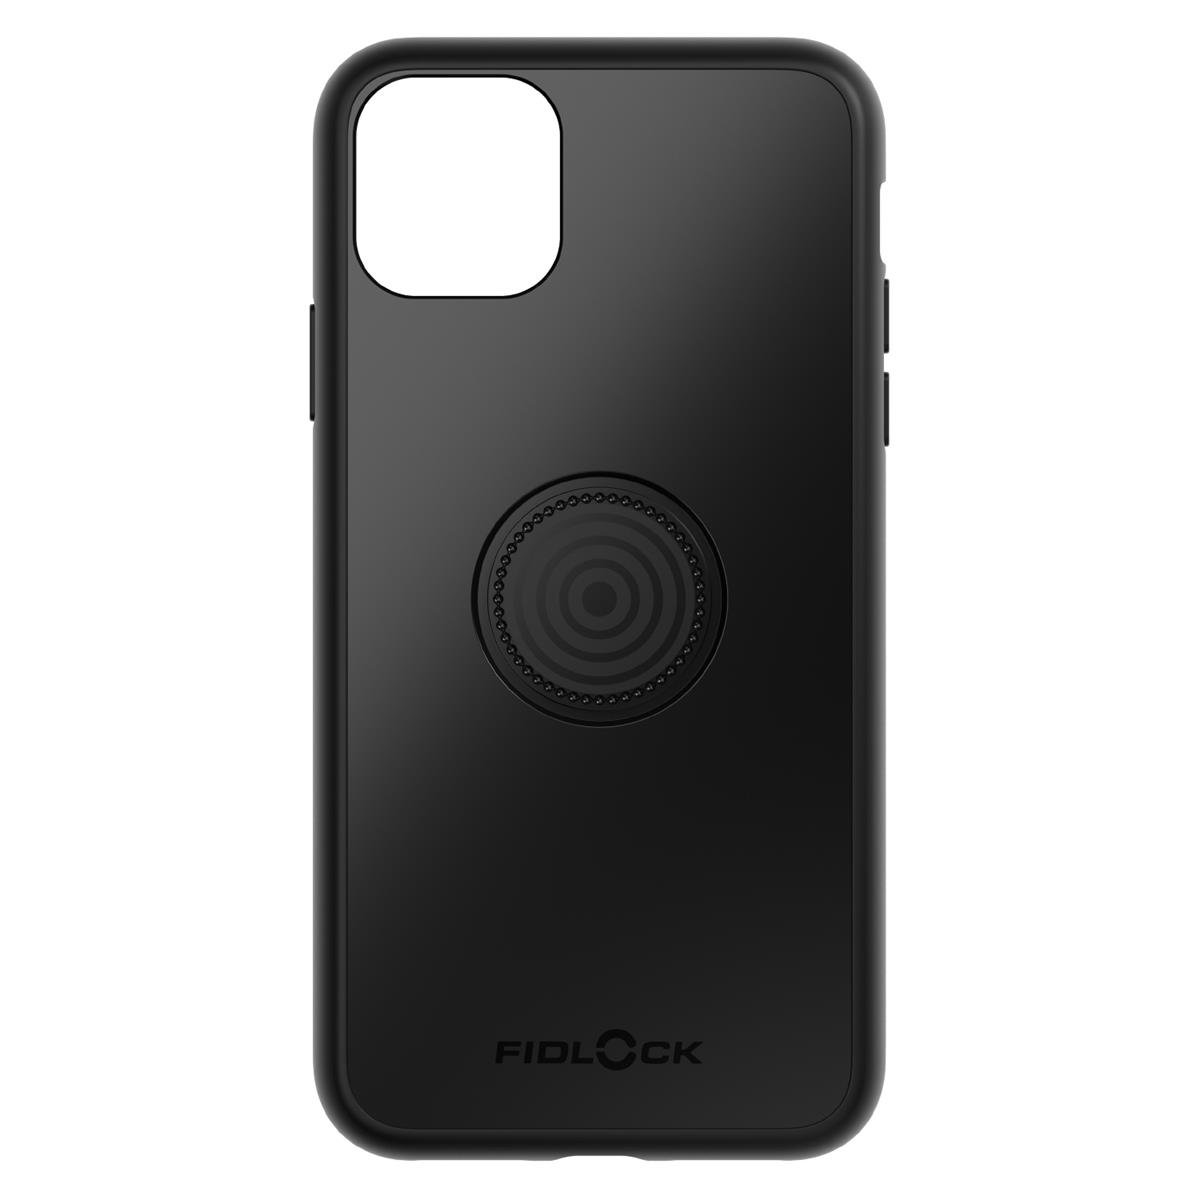 Fidlock Smartphone Case/Hülle Vacuum iPhone 11 Pro Max